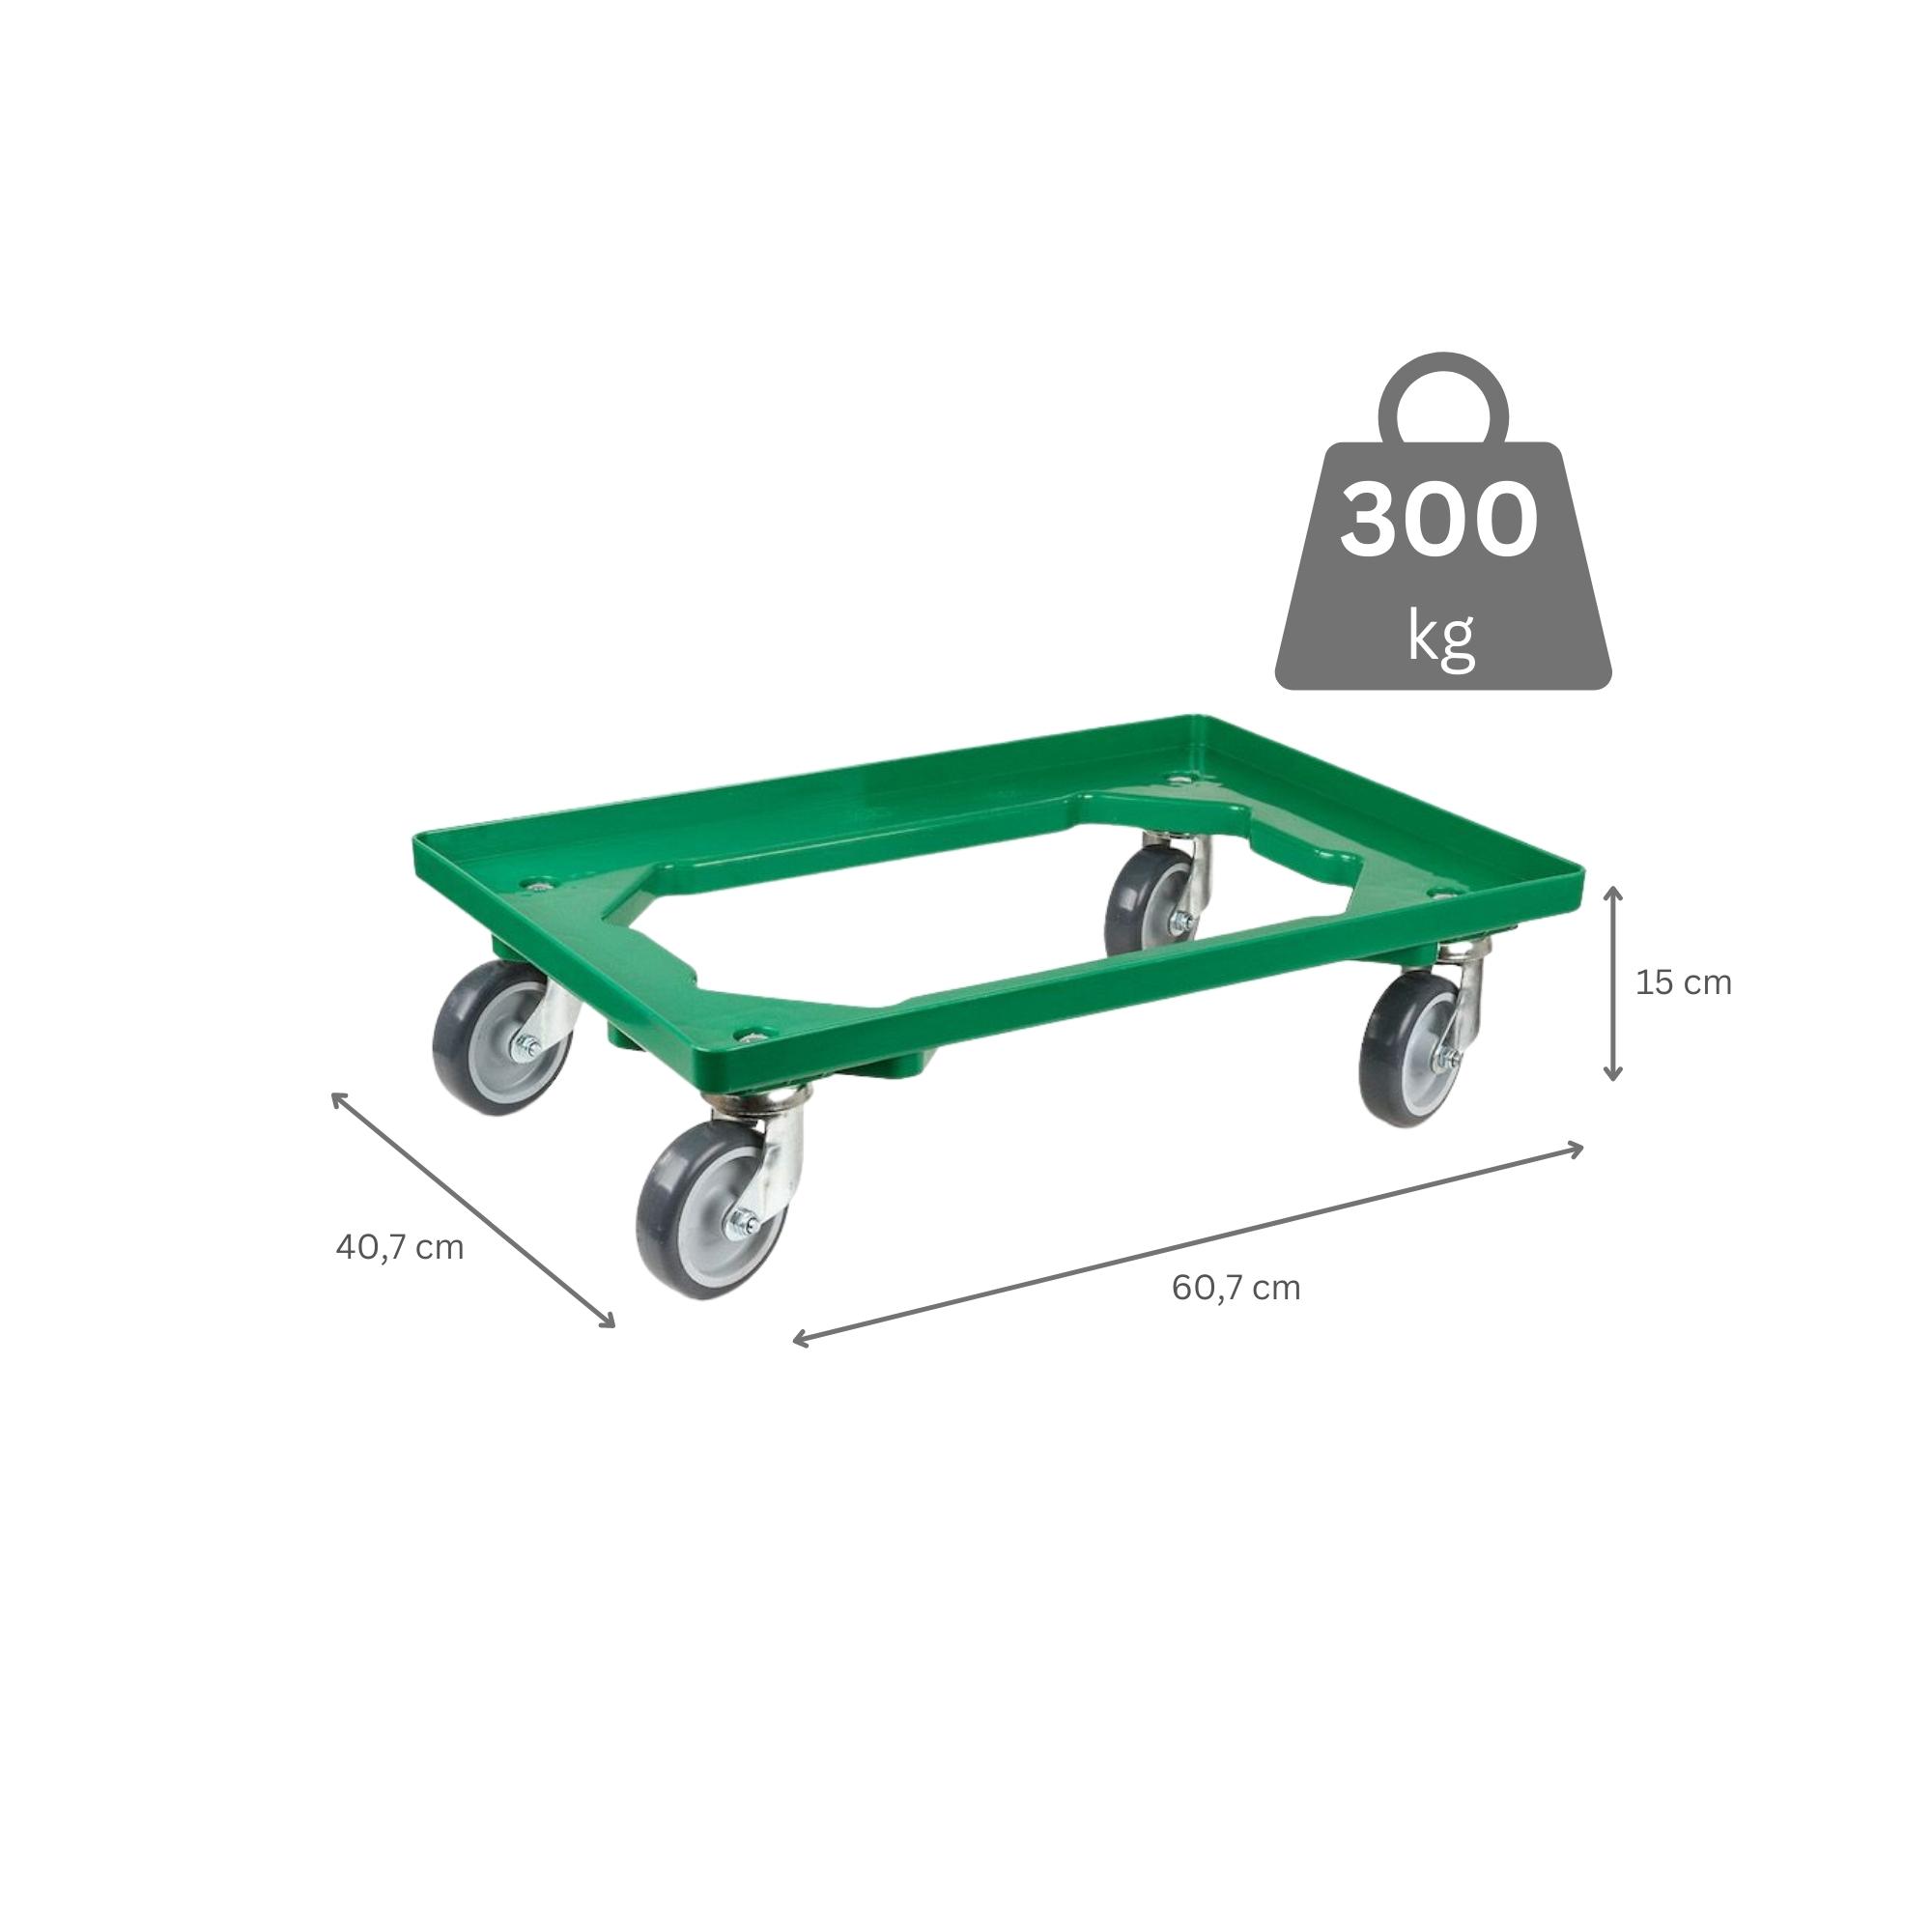 Transportroller für Euroboxen 60x40cm mit Gummiräder grün | Offenes Deck | 2 Lenkrollen & 2 Bockrollen | Traglast 300kg | Kistenroller Logistikroller Rollwagen Profi-Fahrgestell